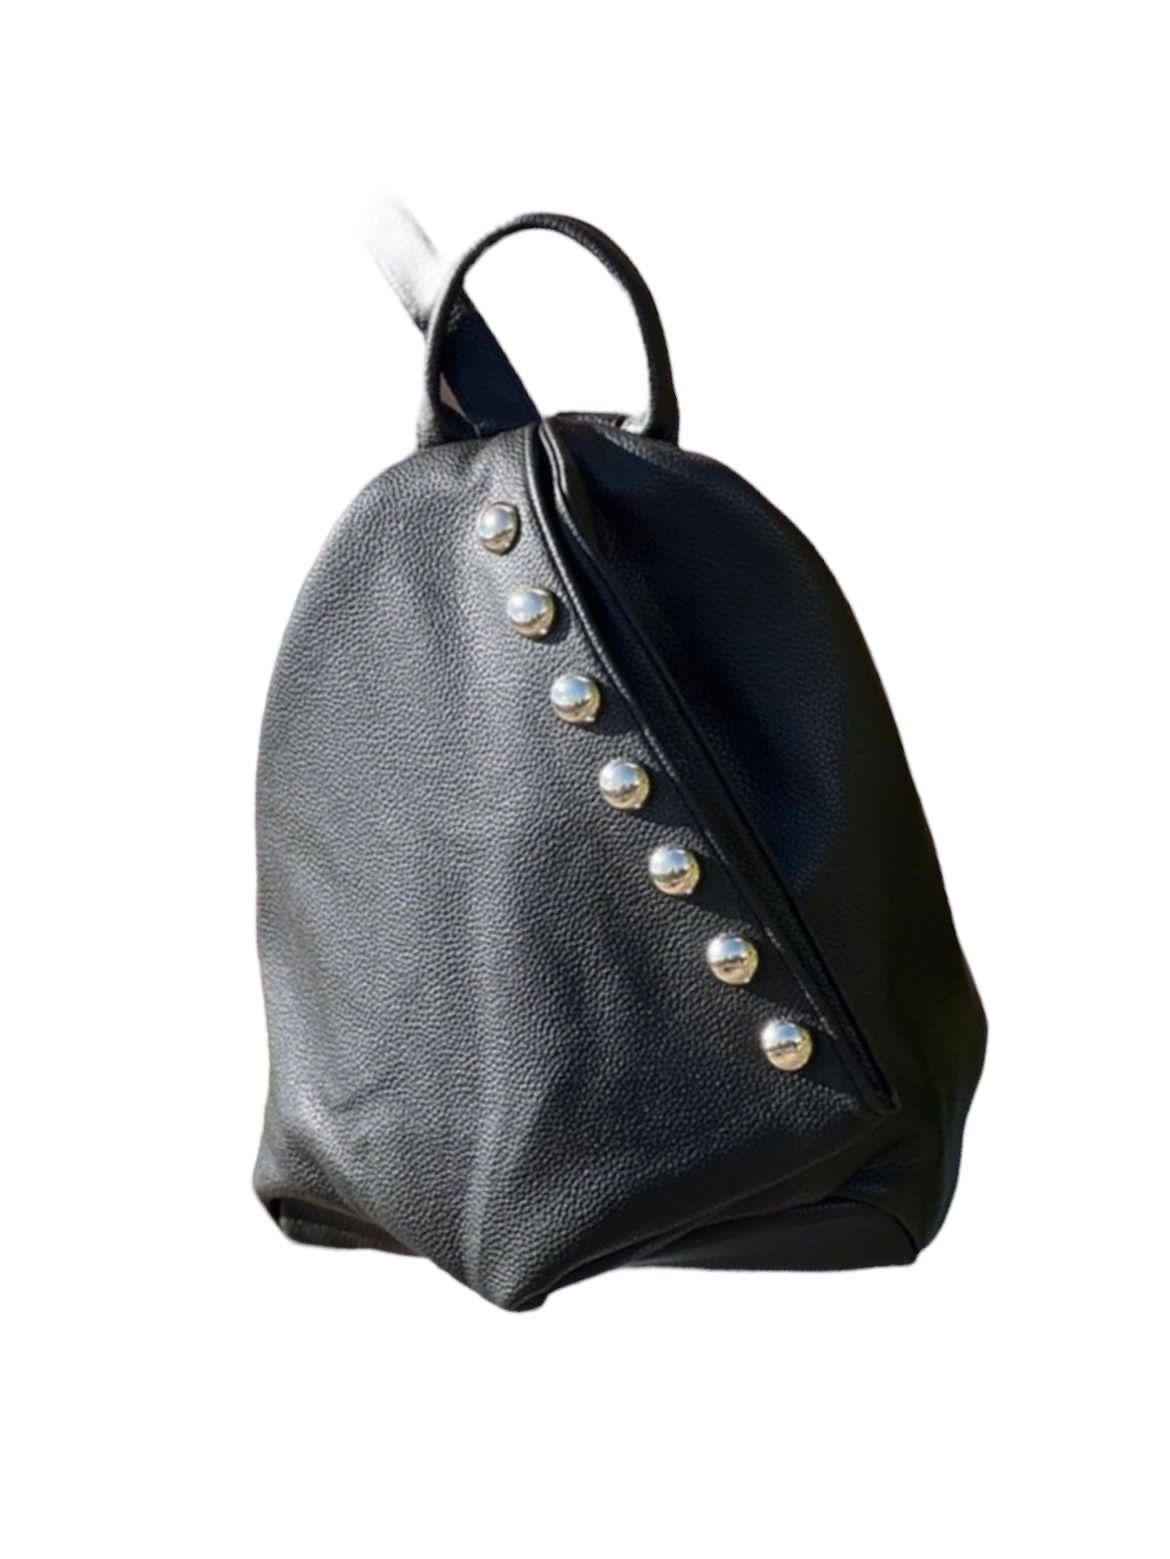 Рюкзак женский Bestbackpack F-1 черный, 25х10х10 см